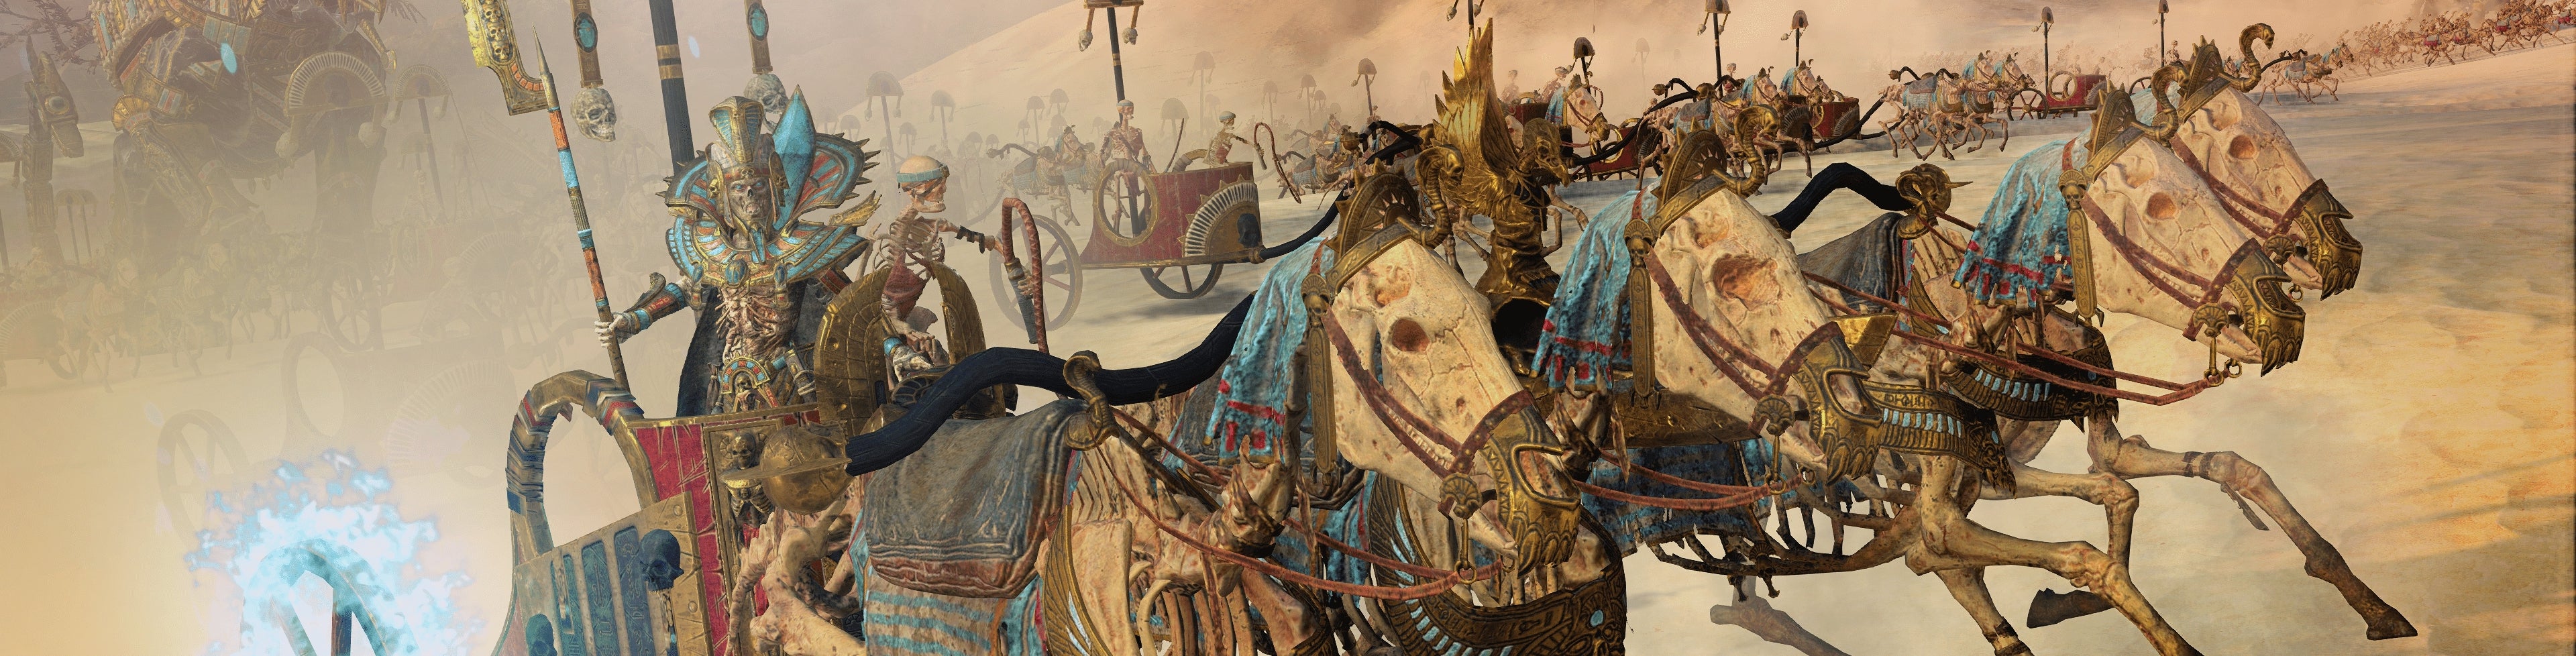 Obrazki dla Total War: Warhammer 2 - gramy frakcją Tomb Kings